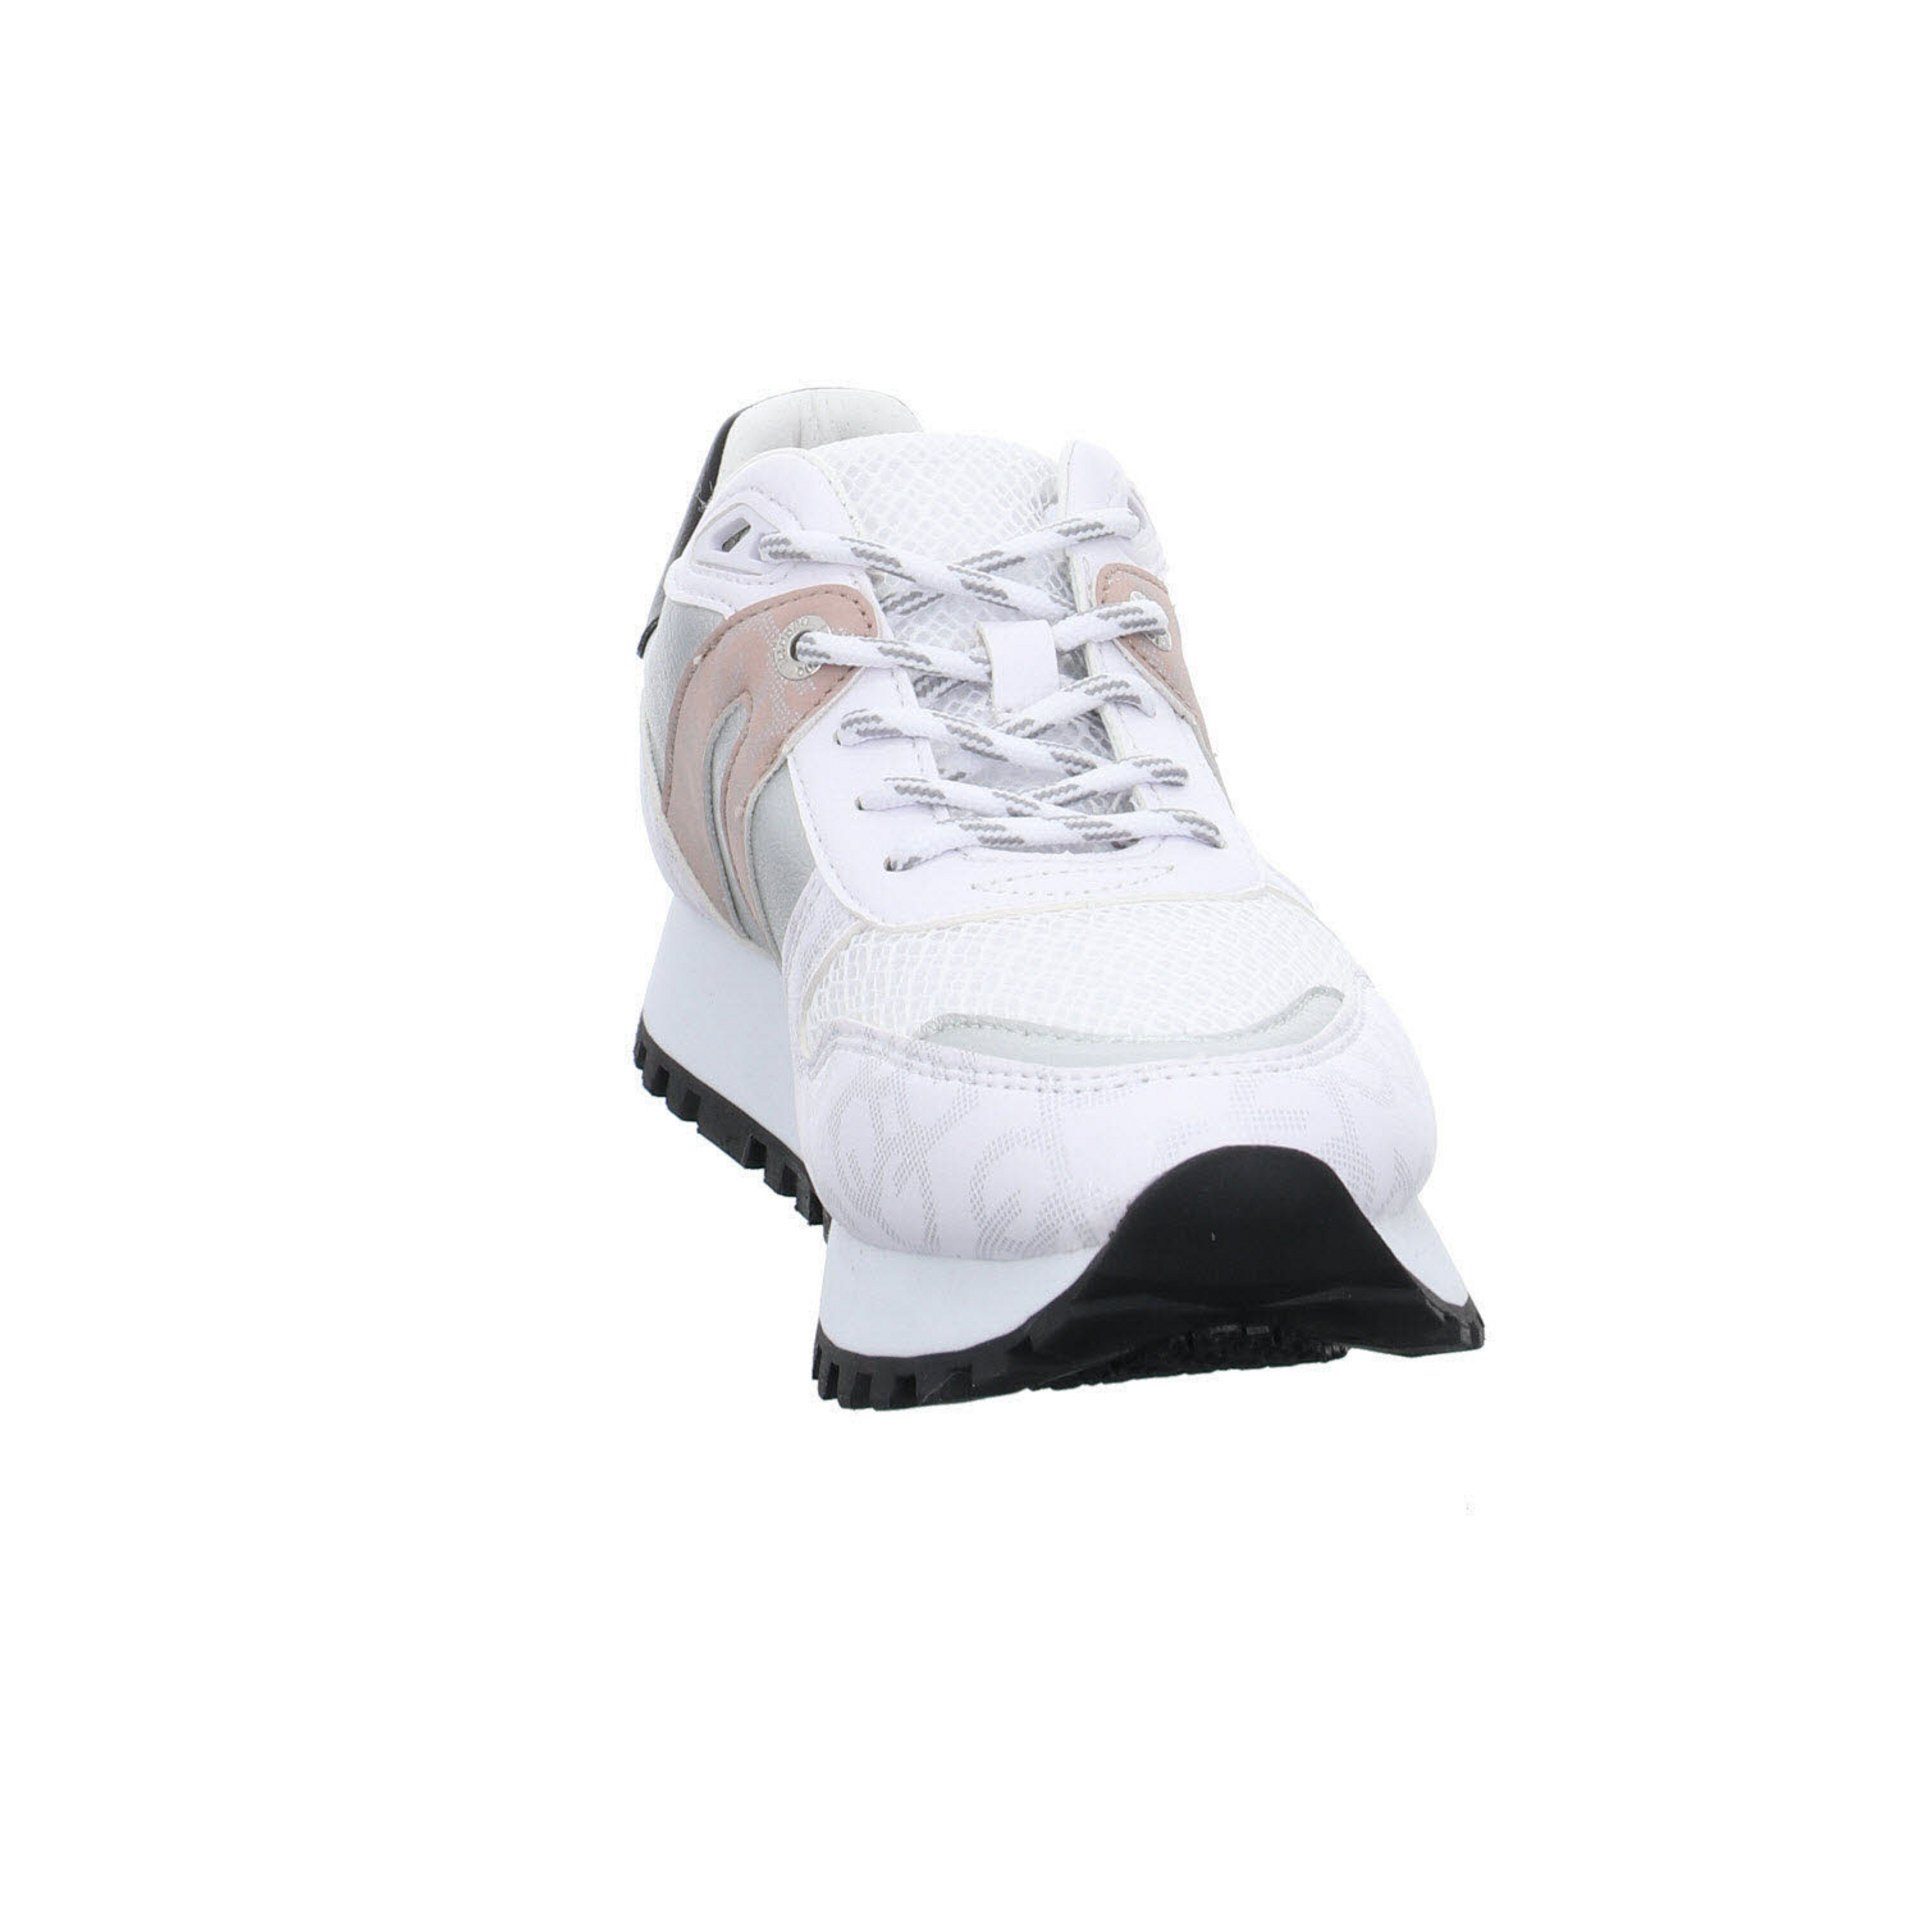 Siena Schuhe Leder-/Textilkombination white Schnürschuh bugatti / Damen Sneaker silver Sneaker